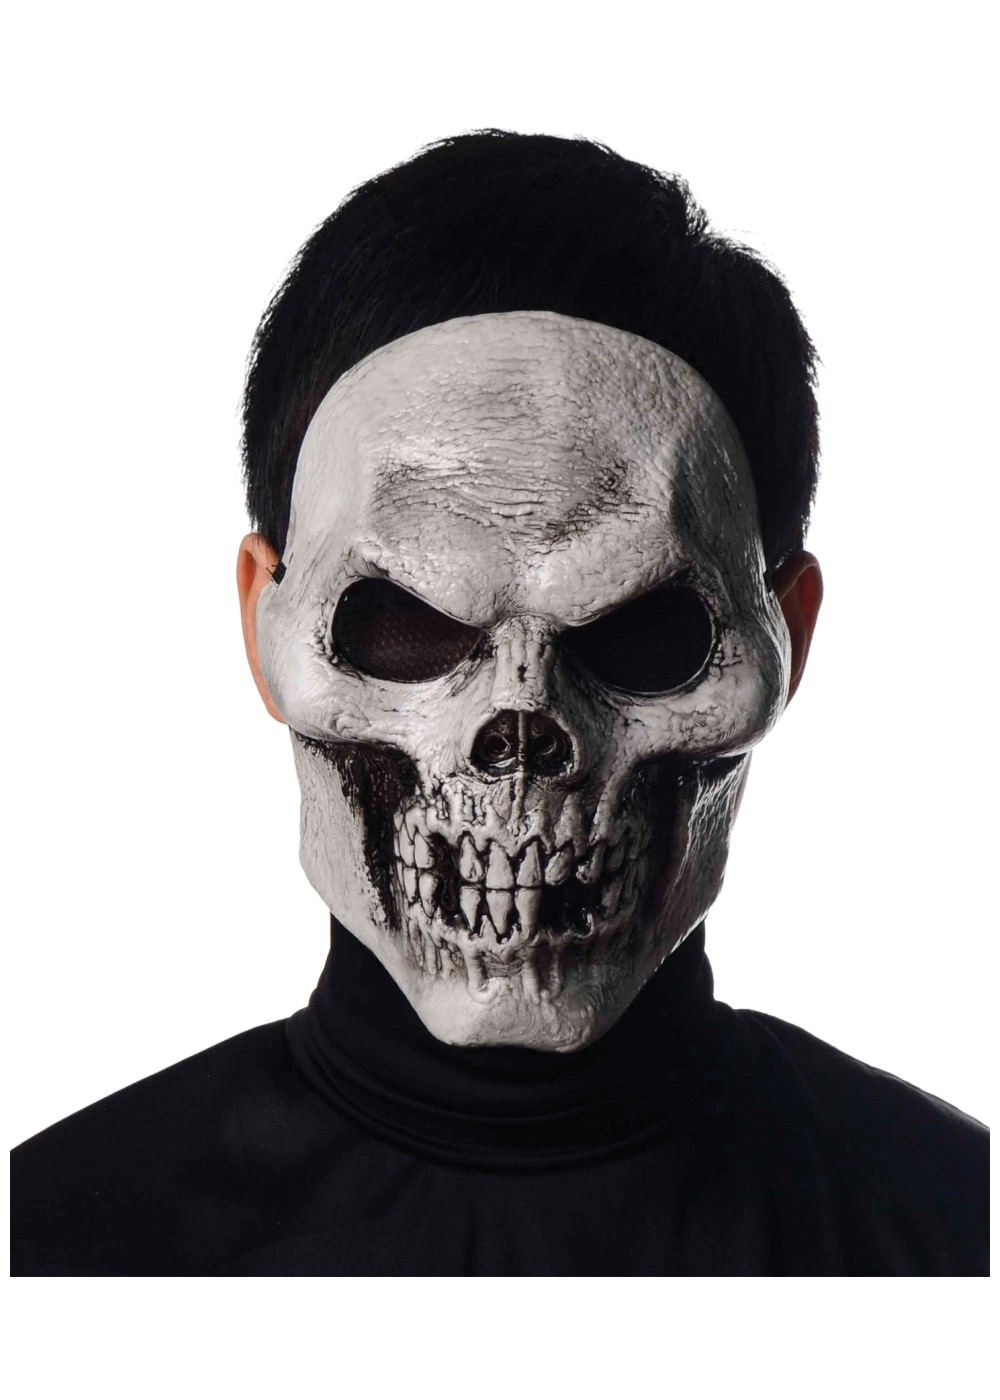 Skull Injection Mask